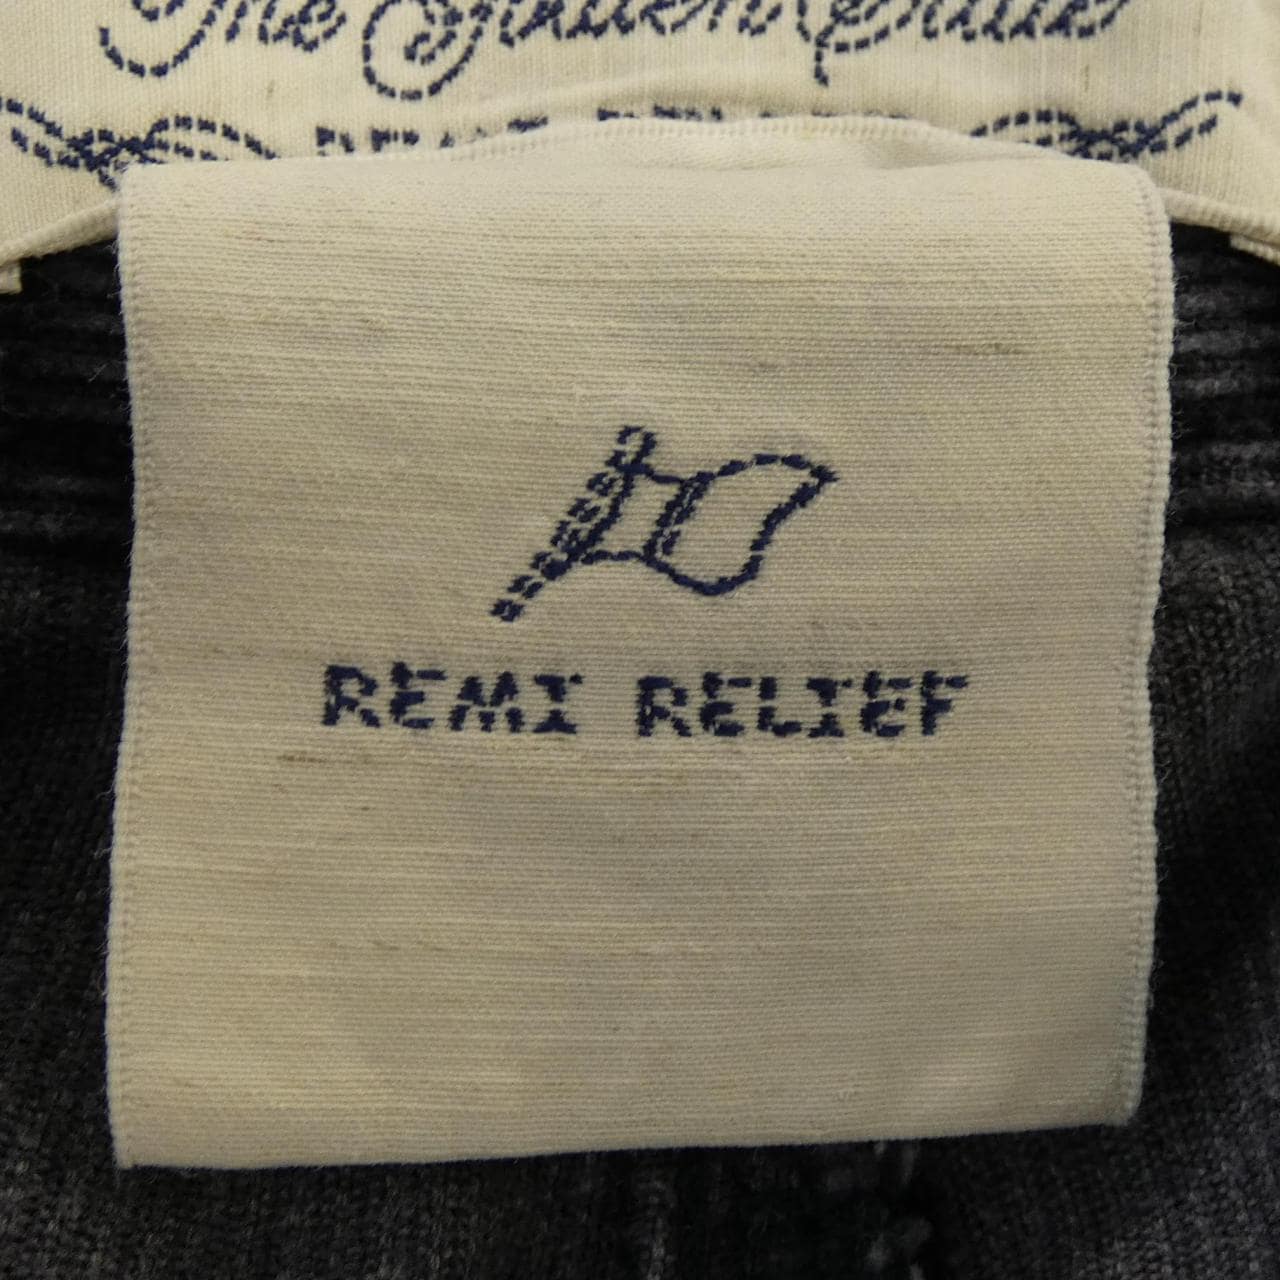 Remi relief REMI RELIEF short pants